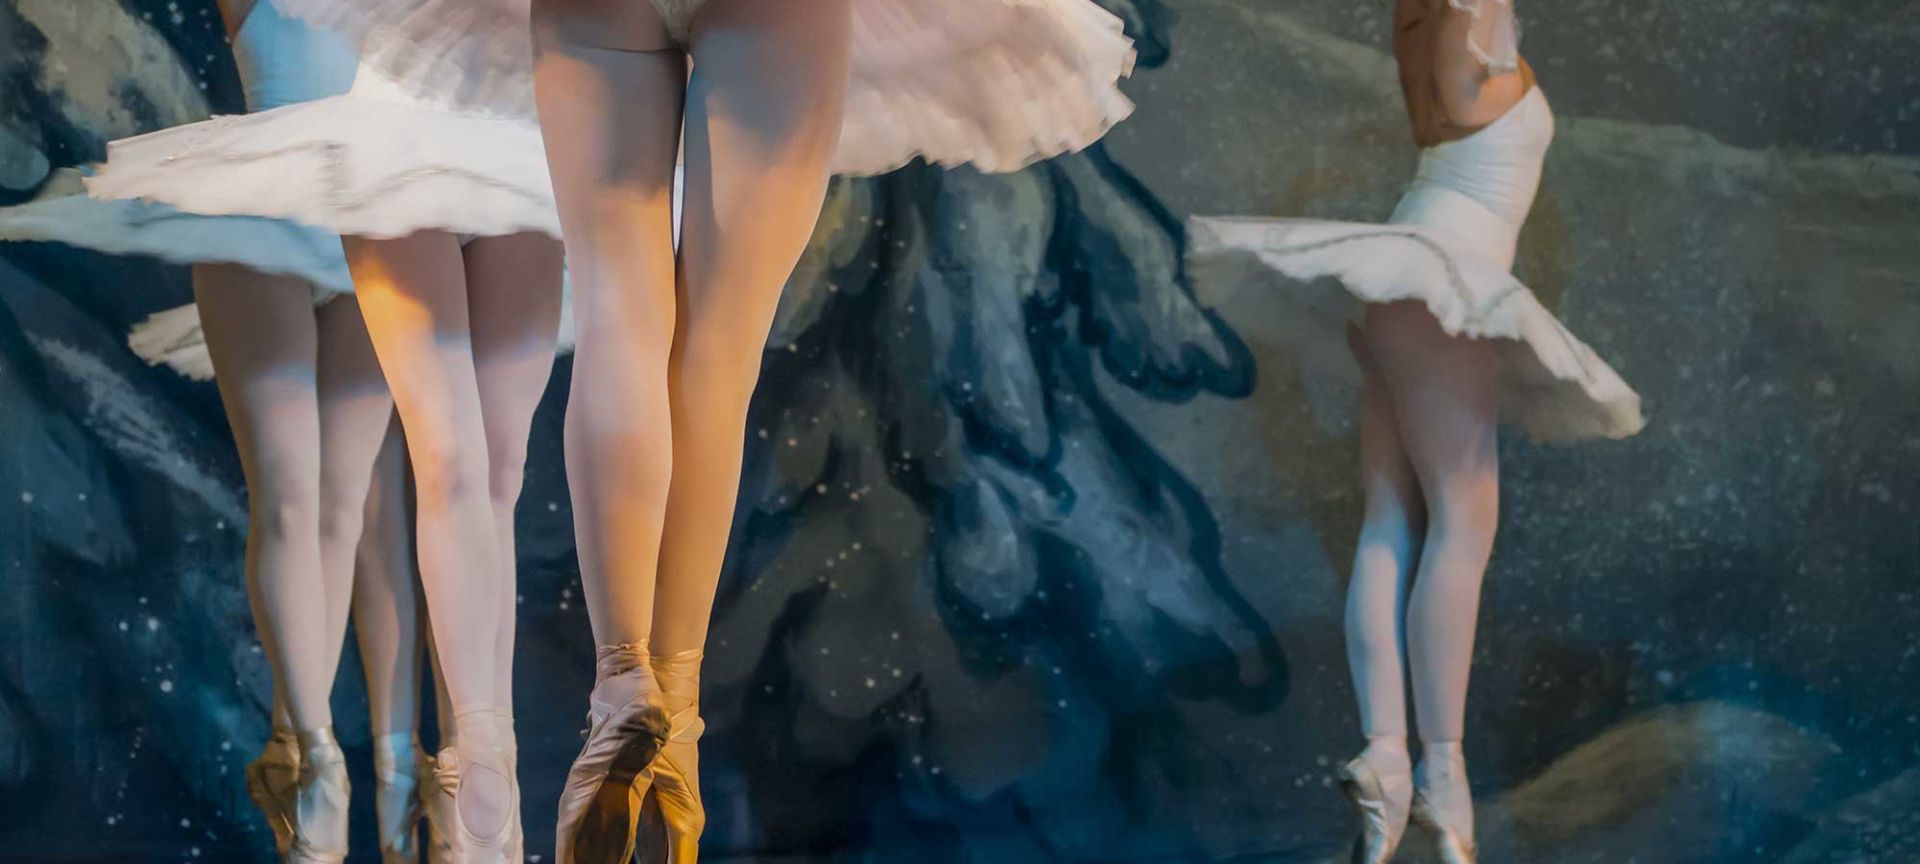 Ballet Dancer During a Performance